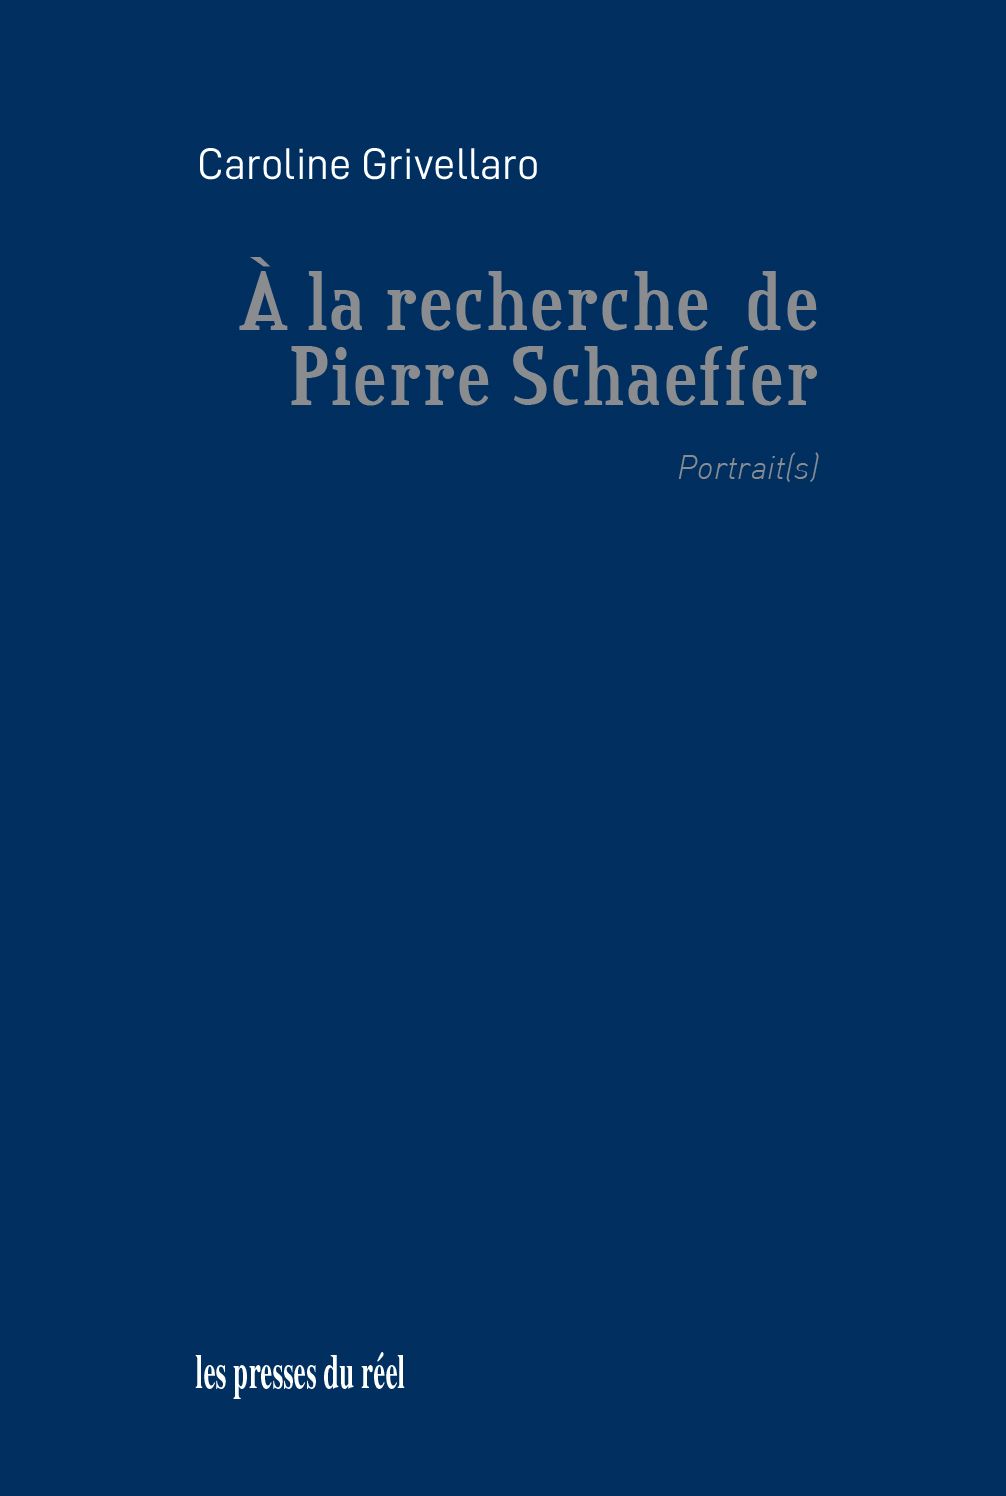 Pierre Schaeffer, Caroline Grivellaro, À la recherche de Pierre Schaeffer – Portrait(s)